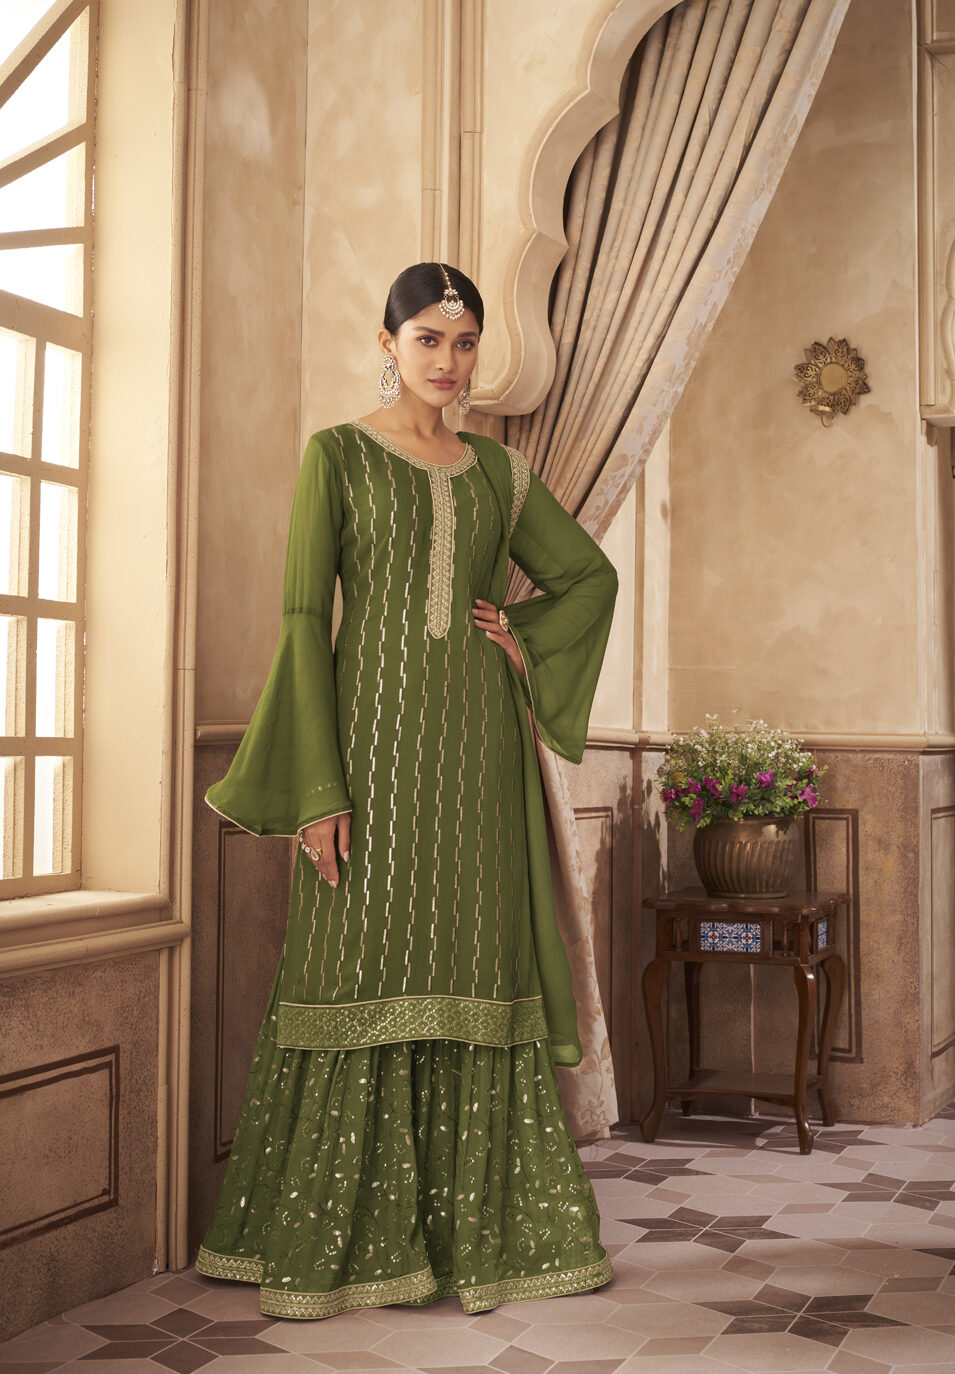 Buy MA DESIGN HUT Salwar Kameez Suit Ladies Cotton Best Summer Gift -  Unstitched Ladies Salwar Kameez Dress at Amazon.in